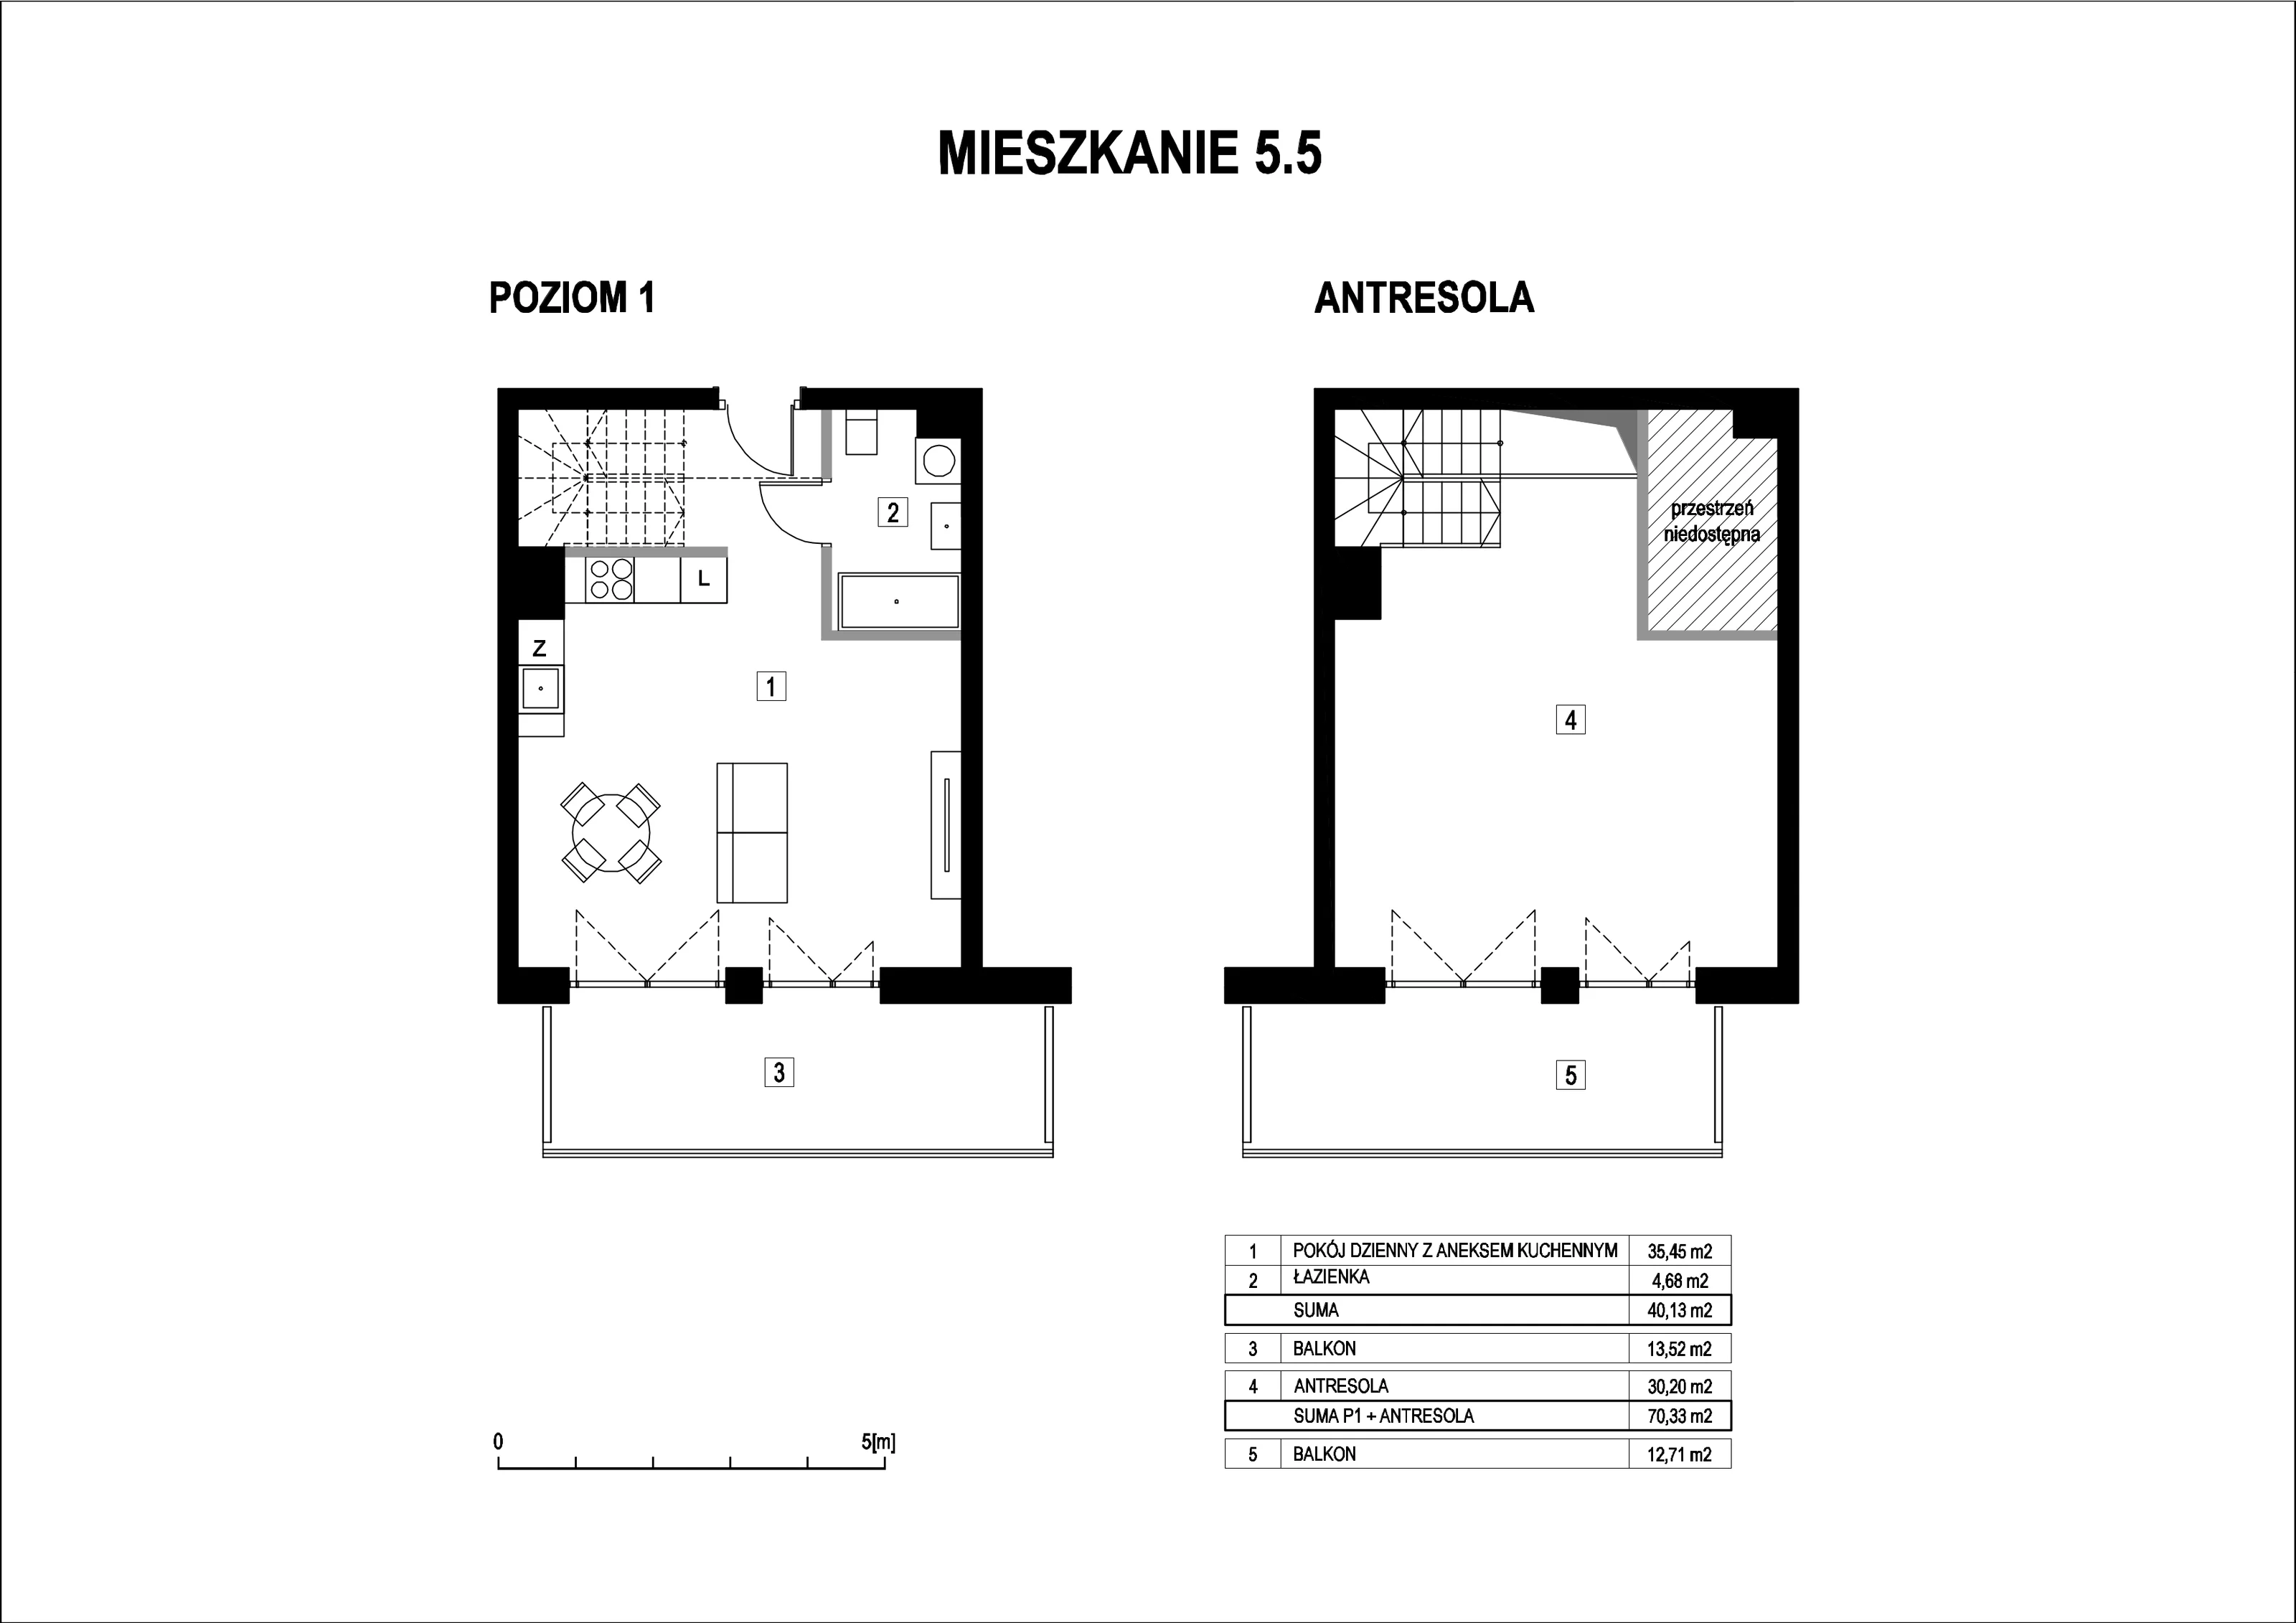 Apartament 70,33 m², piętro 5, oferta nr M5_5, La Vie Art, Łódź, Polesie, ul. 6 Sierpnia 10